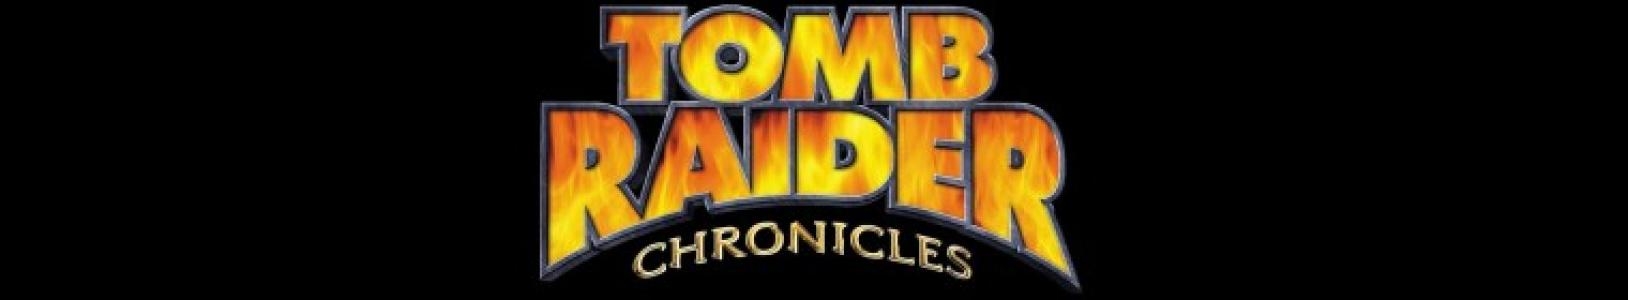 Tomb Raider: Chronicles banner